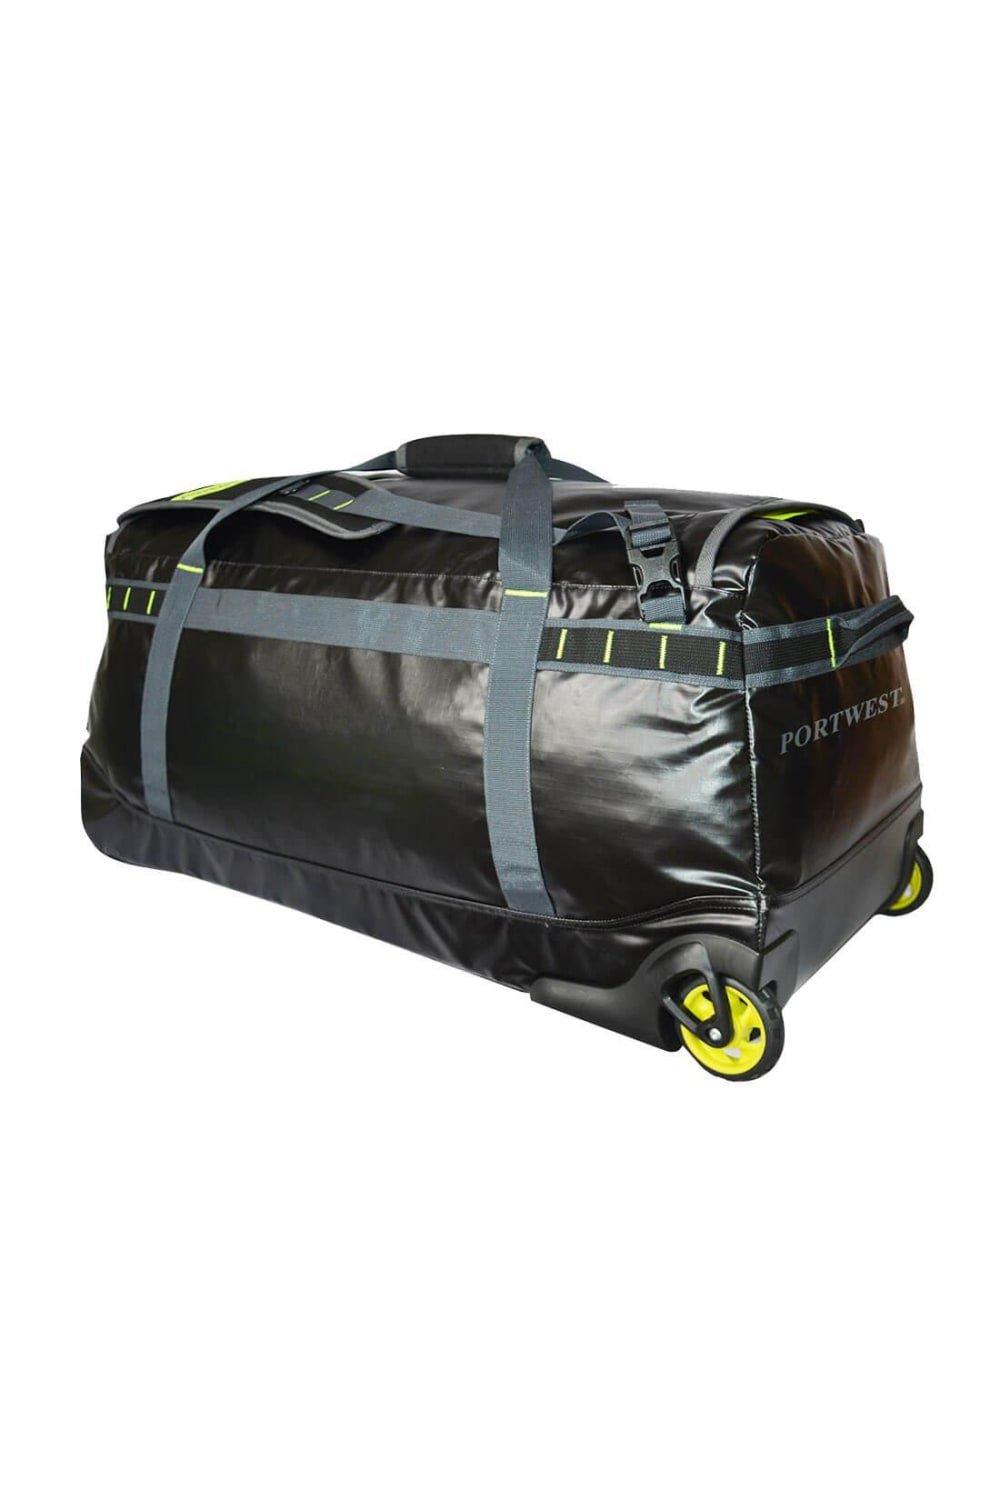 PW3 Water Resistant 100L Wheeled Duffel Bag